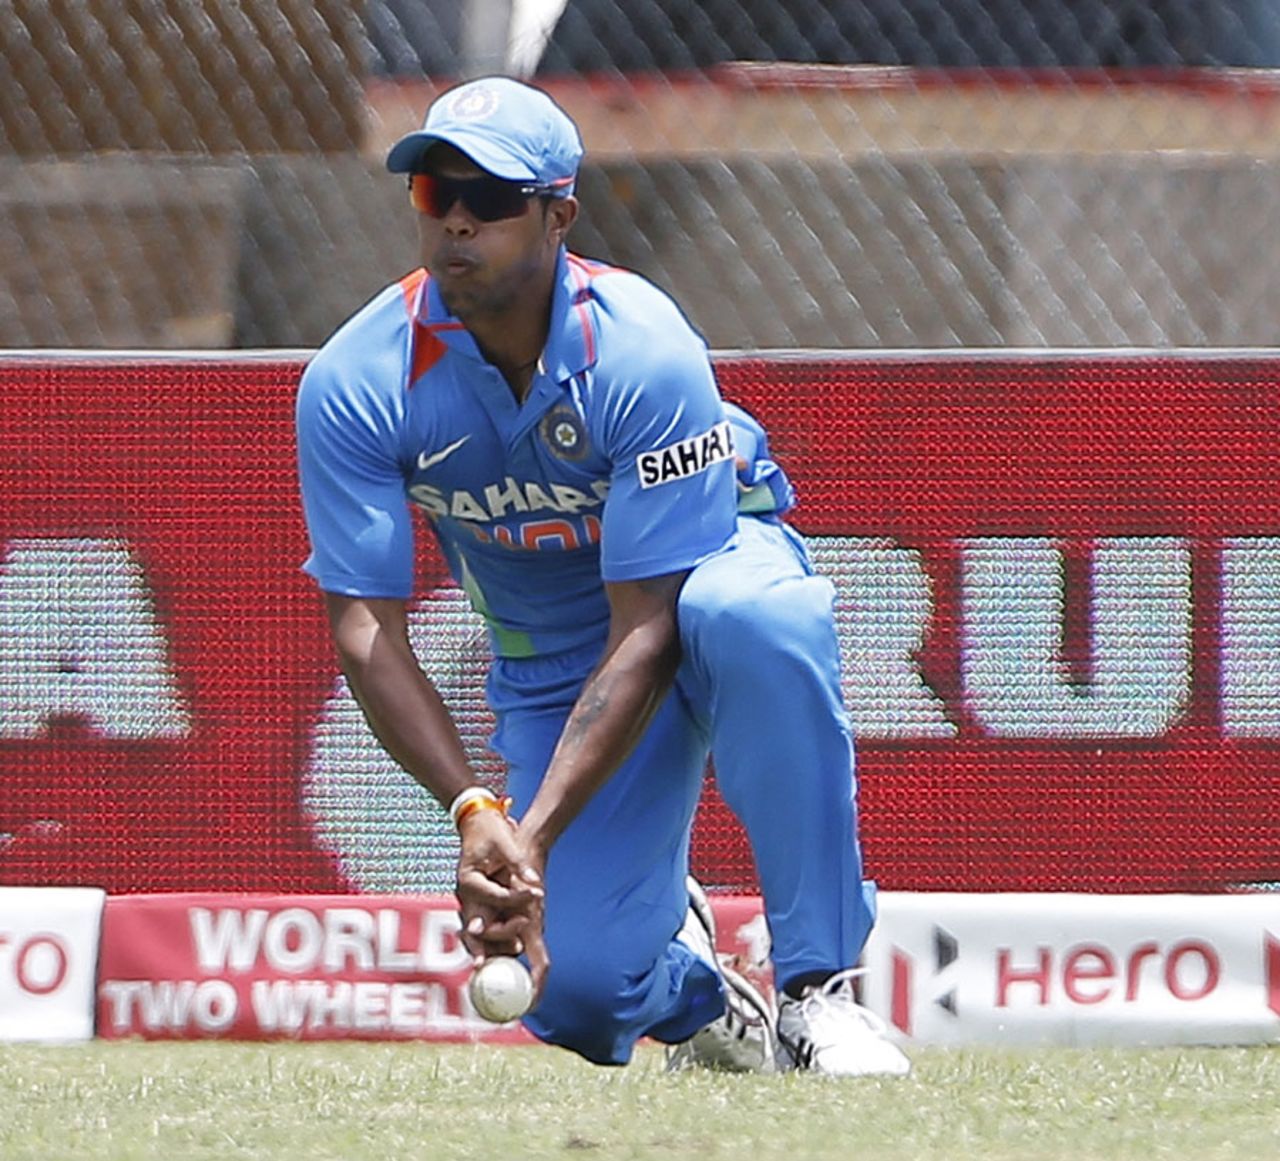 Umesh Yadav drops Upul Tharanga at third man, India v Sri Lanka, West Indies tri-series, Kingston, July 2, 2013